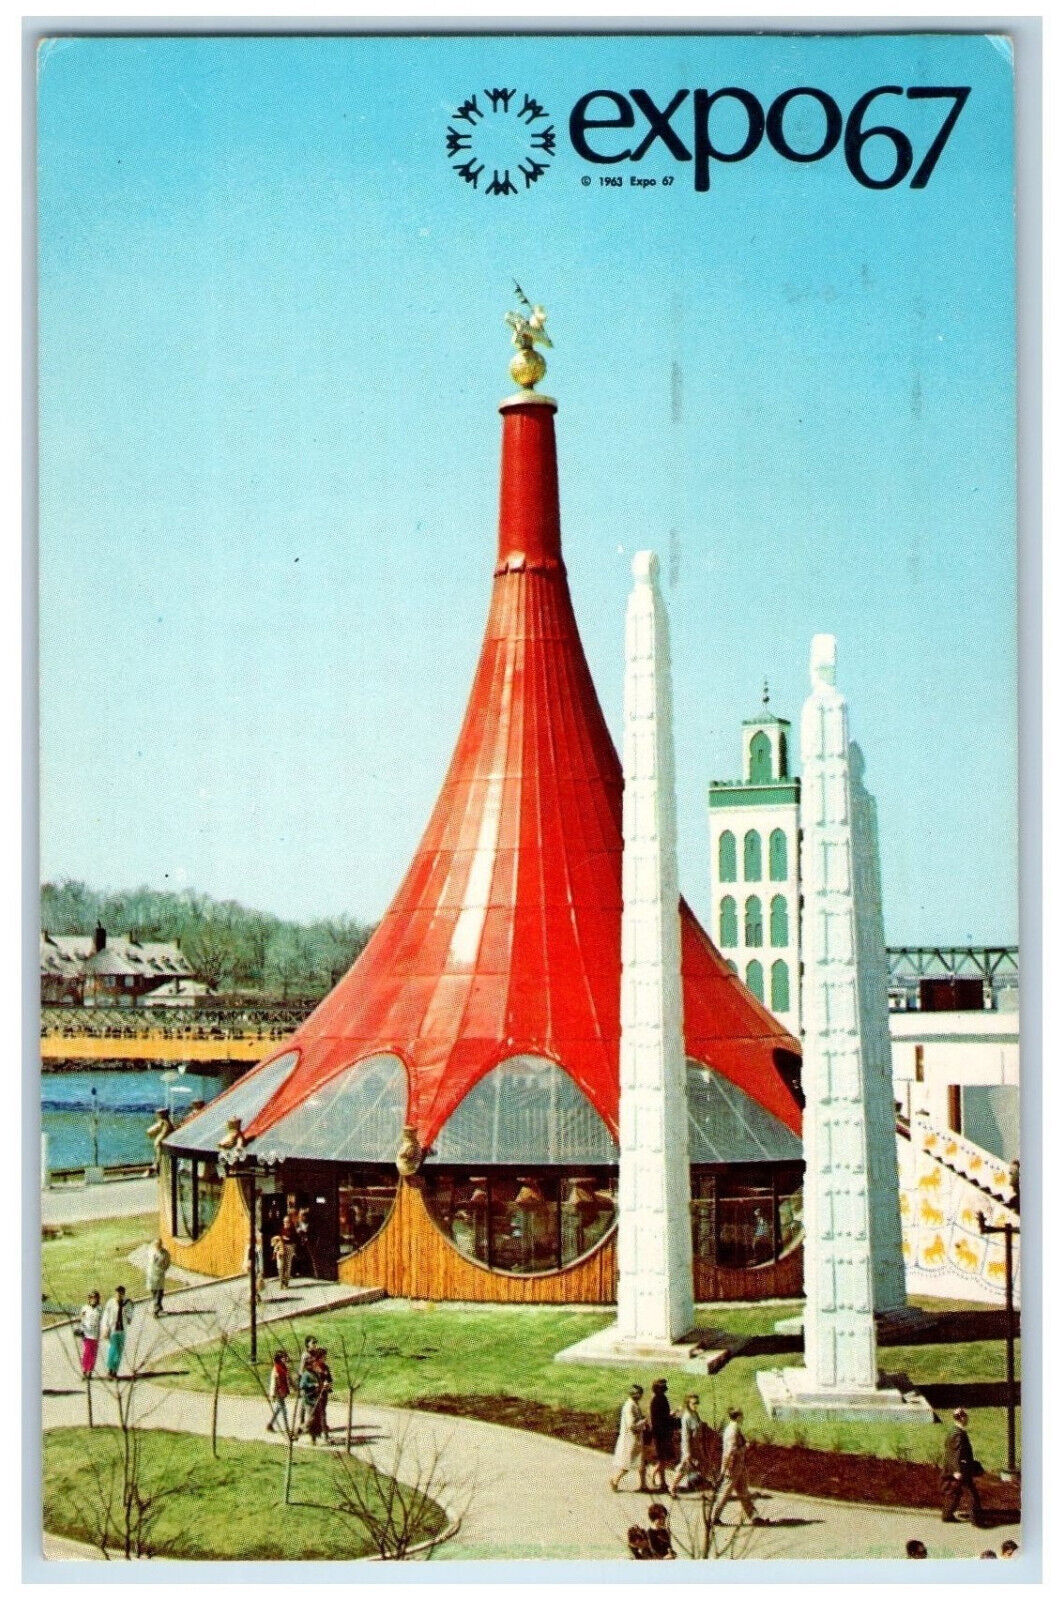 1967 Pavilion of Ethiopia Expo67 Montreal Quebec Canada Vintage Postcard